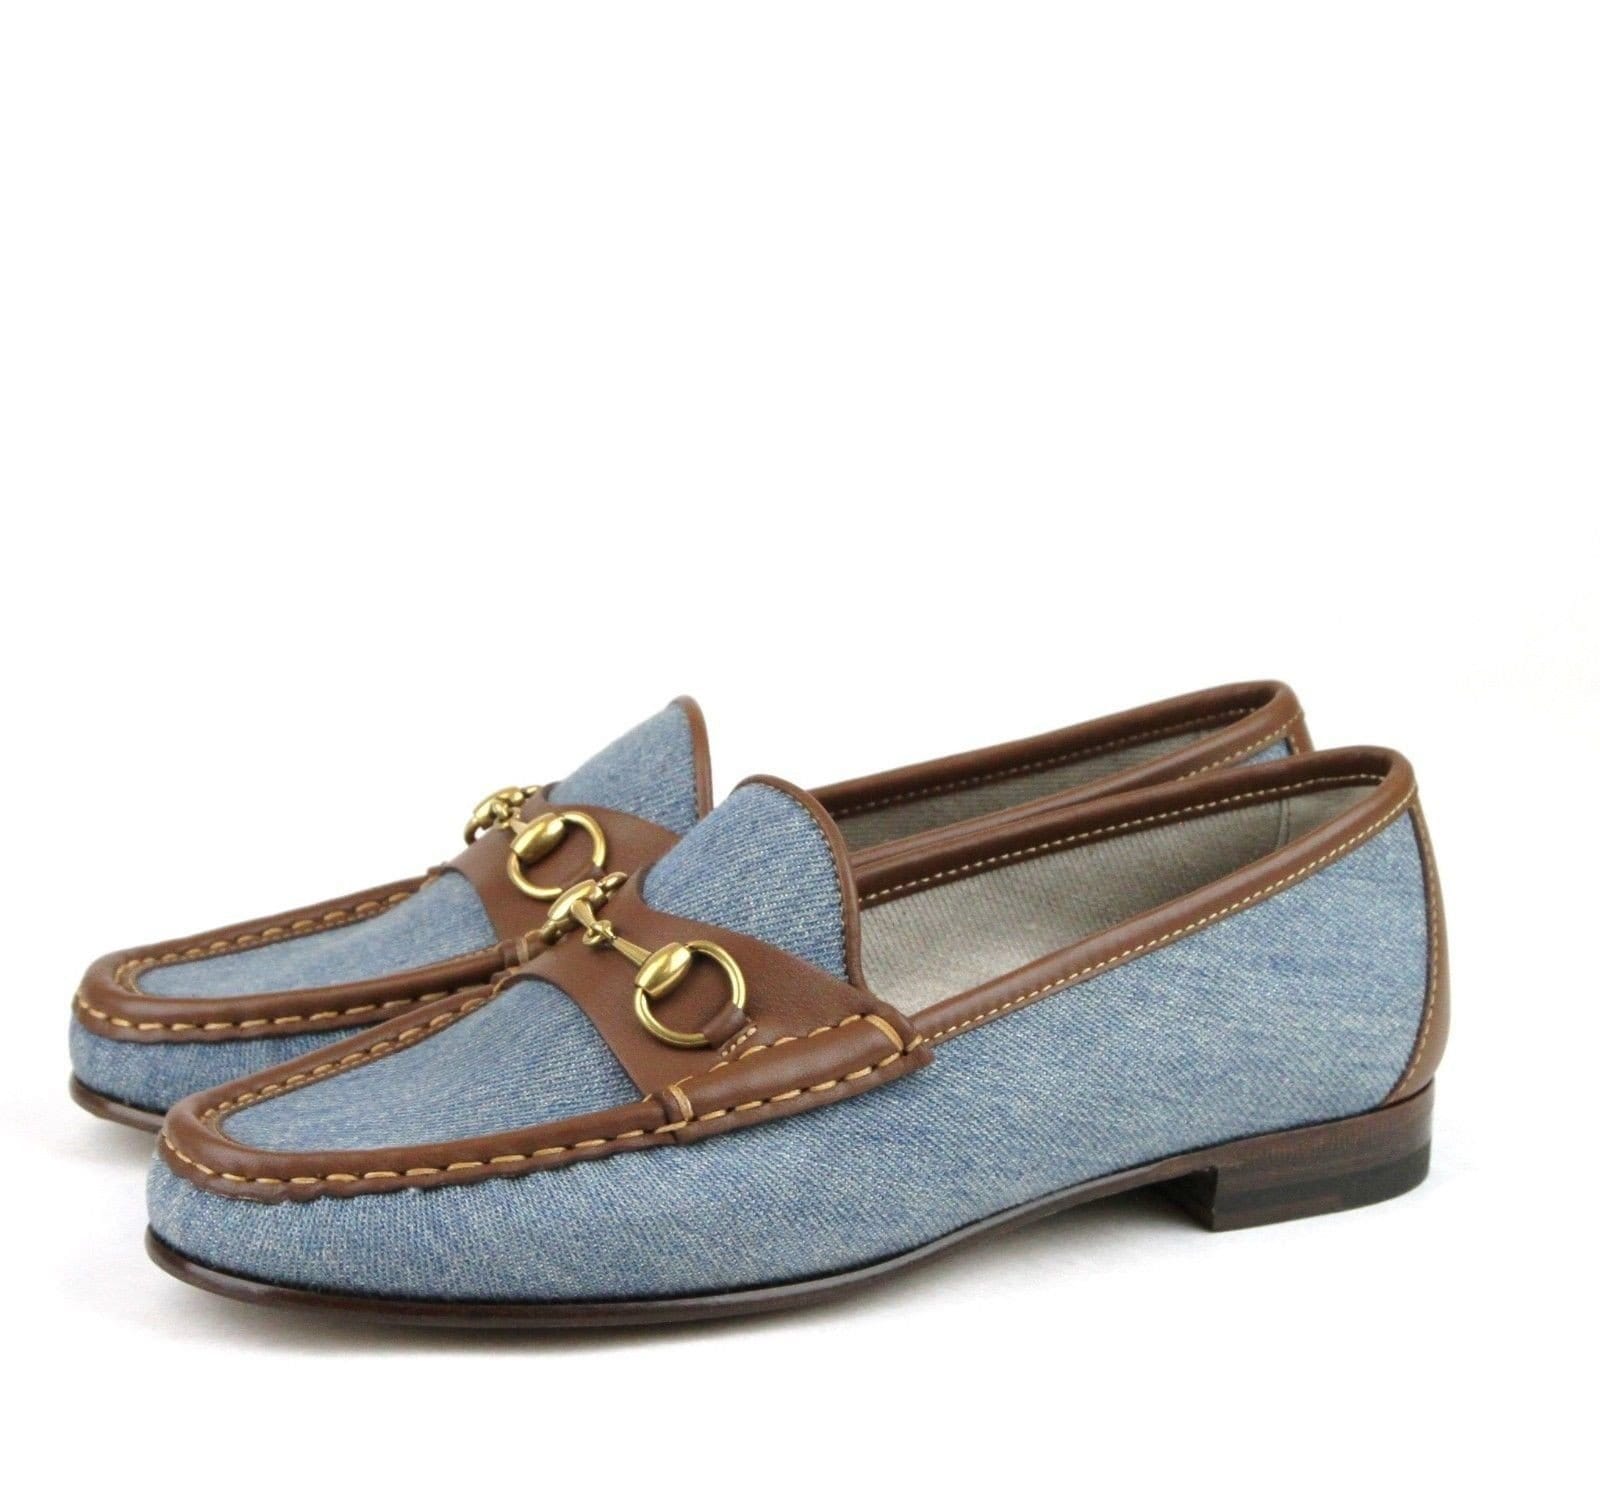 Gucci Shoes Blue Women - Gucci Horsebit Denim Loafer Shoe